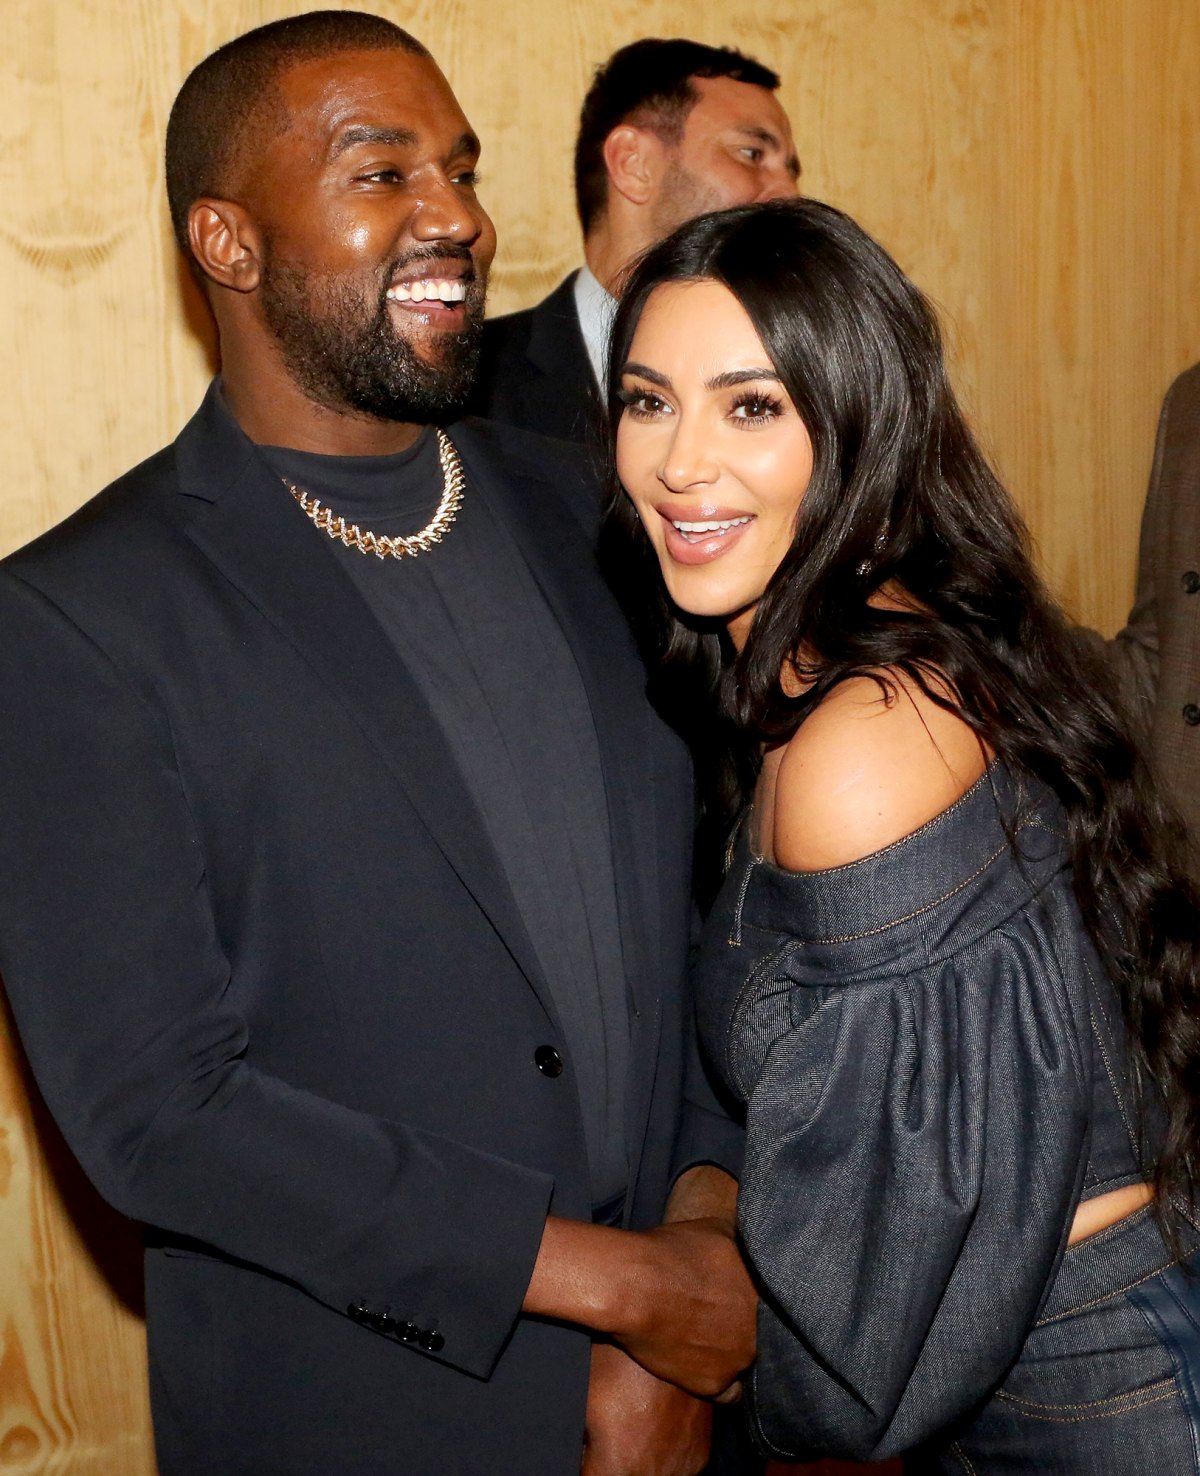 Kim Kardashian And Kanye West - Kim Kardashian, Kanye West's Ups and Downs Through the Years